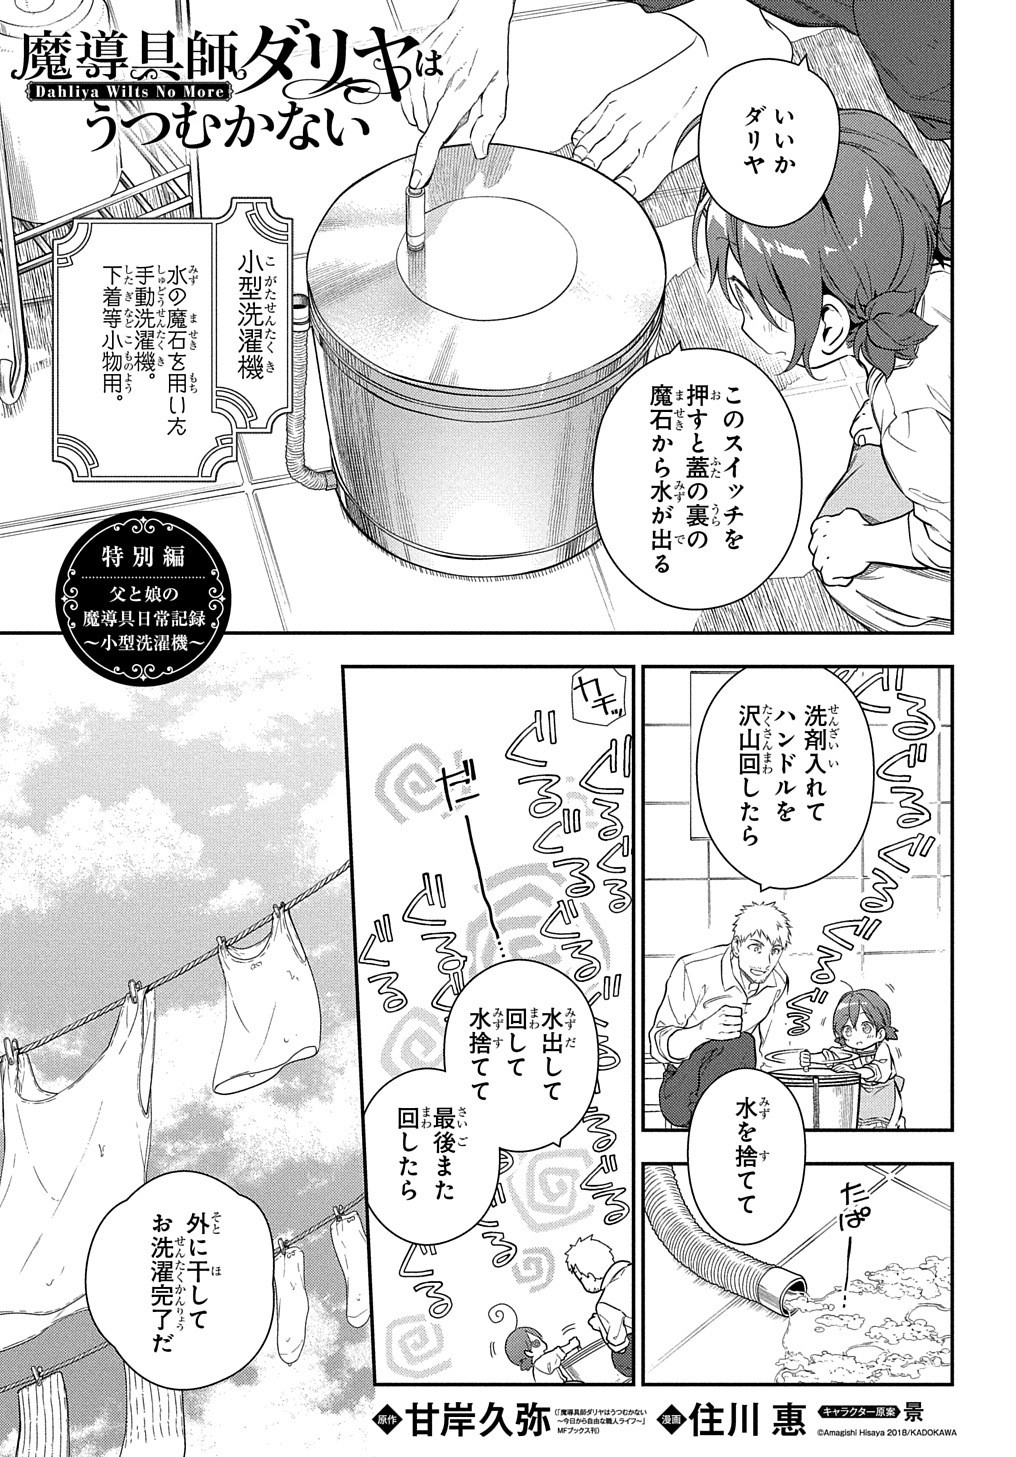 Madougushi Dahlia wa Utsumukanai ~Kyou Kara Jiyuu na Shokunin Life~ - Chapter 8.5 - Page 1